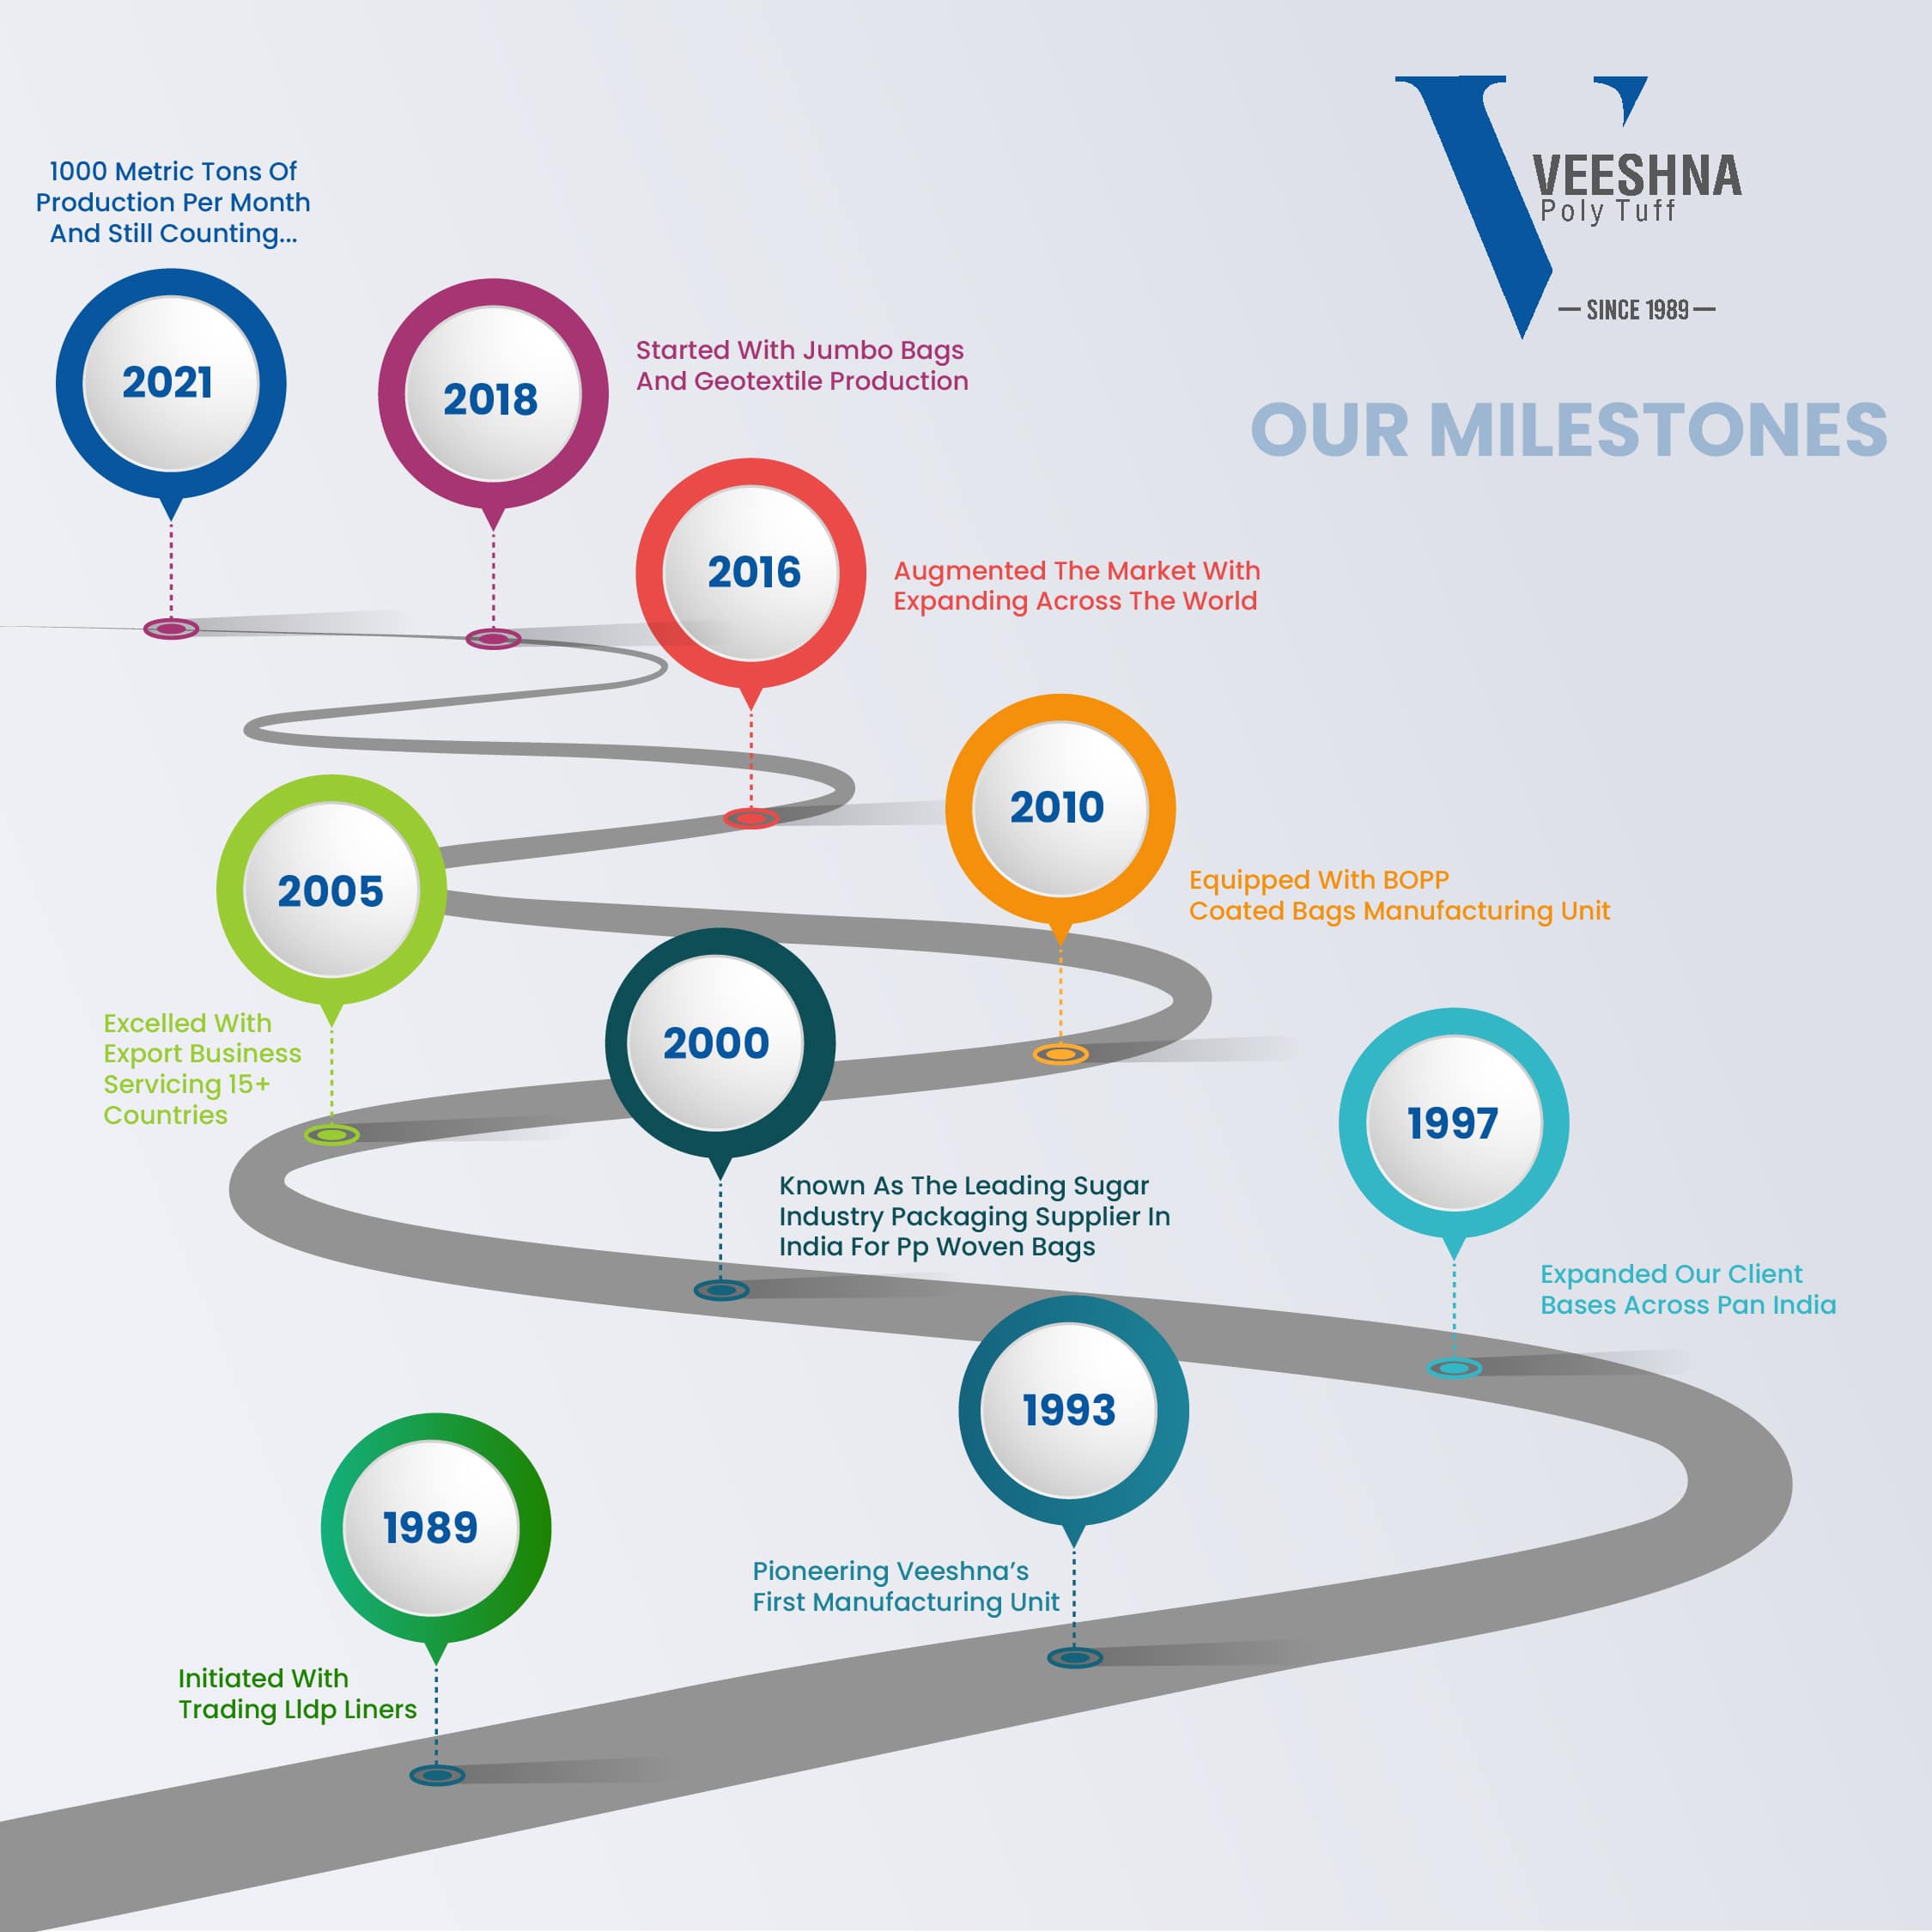 our milestones - Veeshna Plytuff